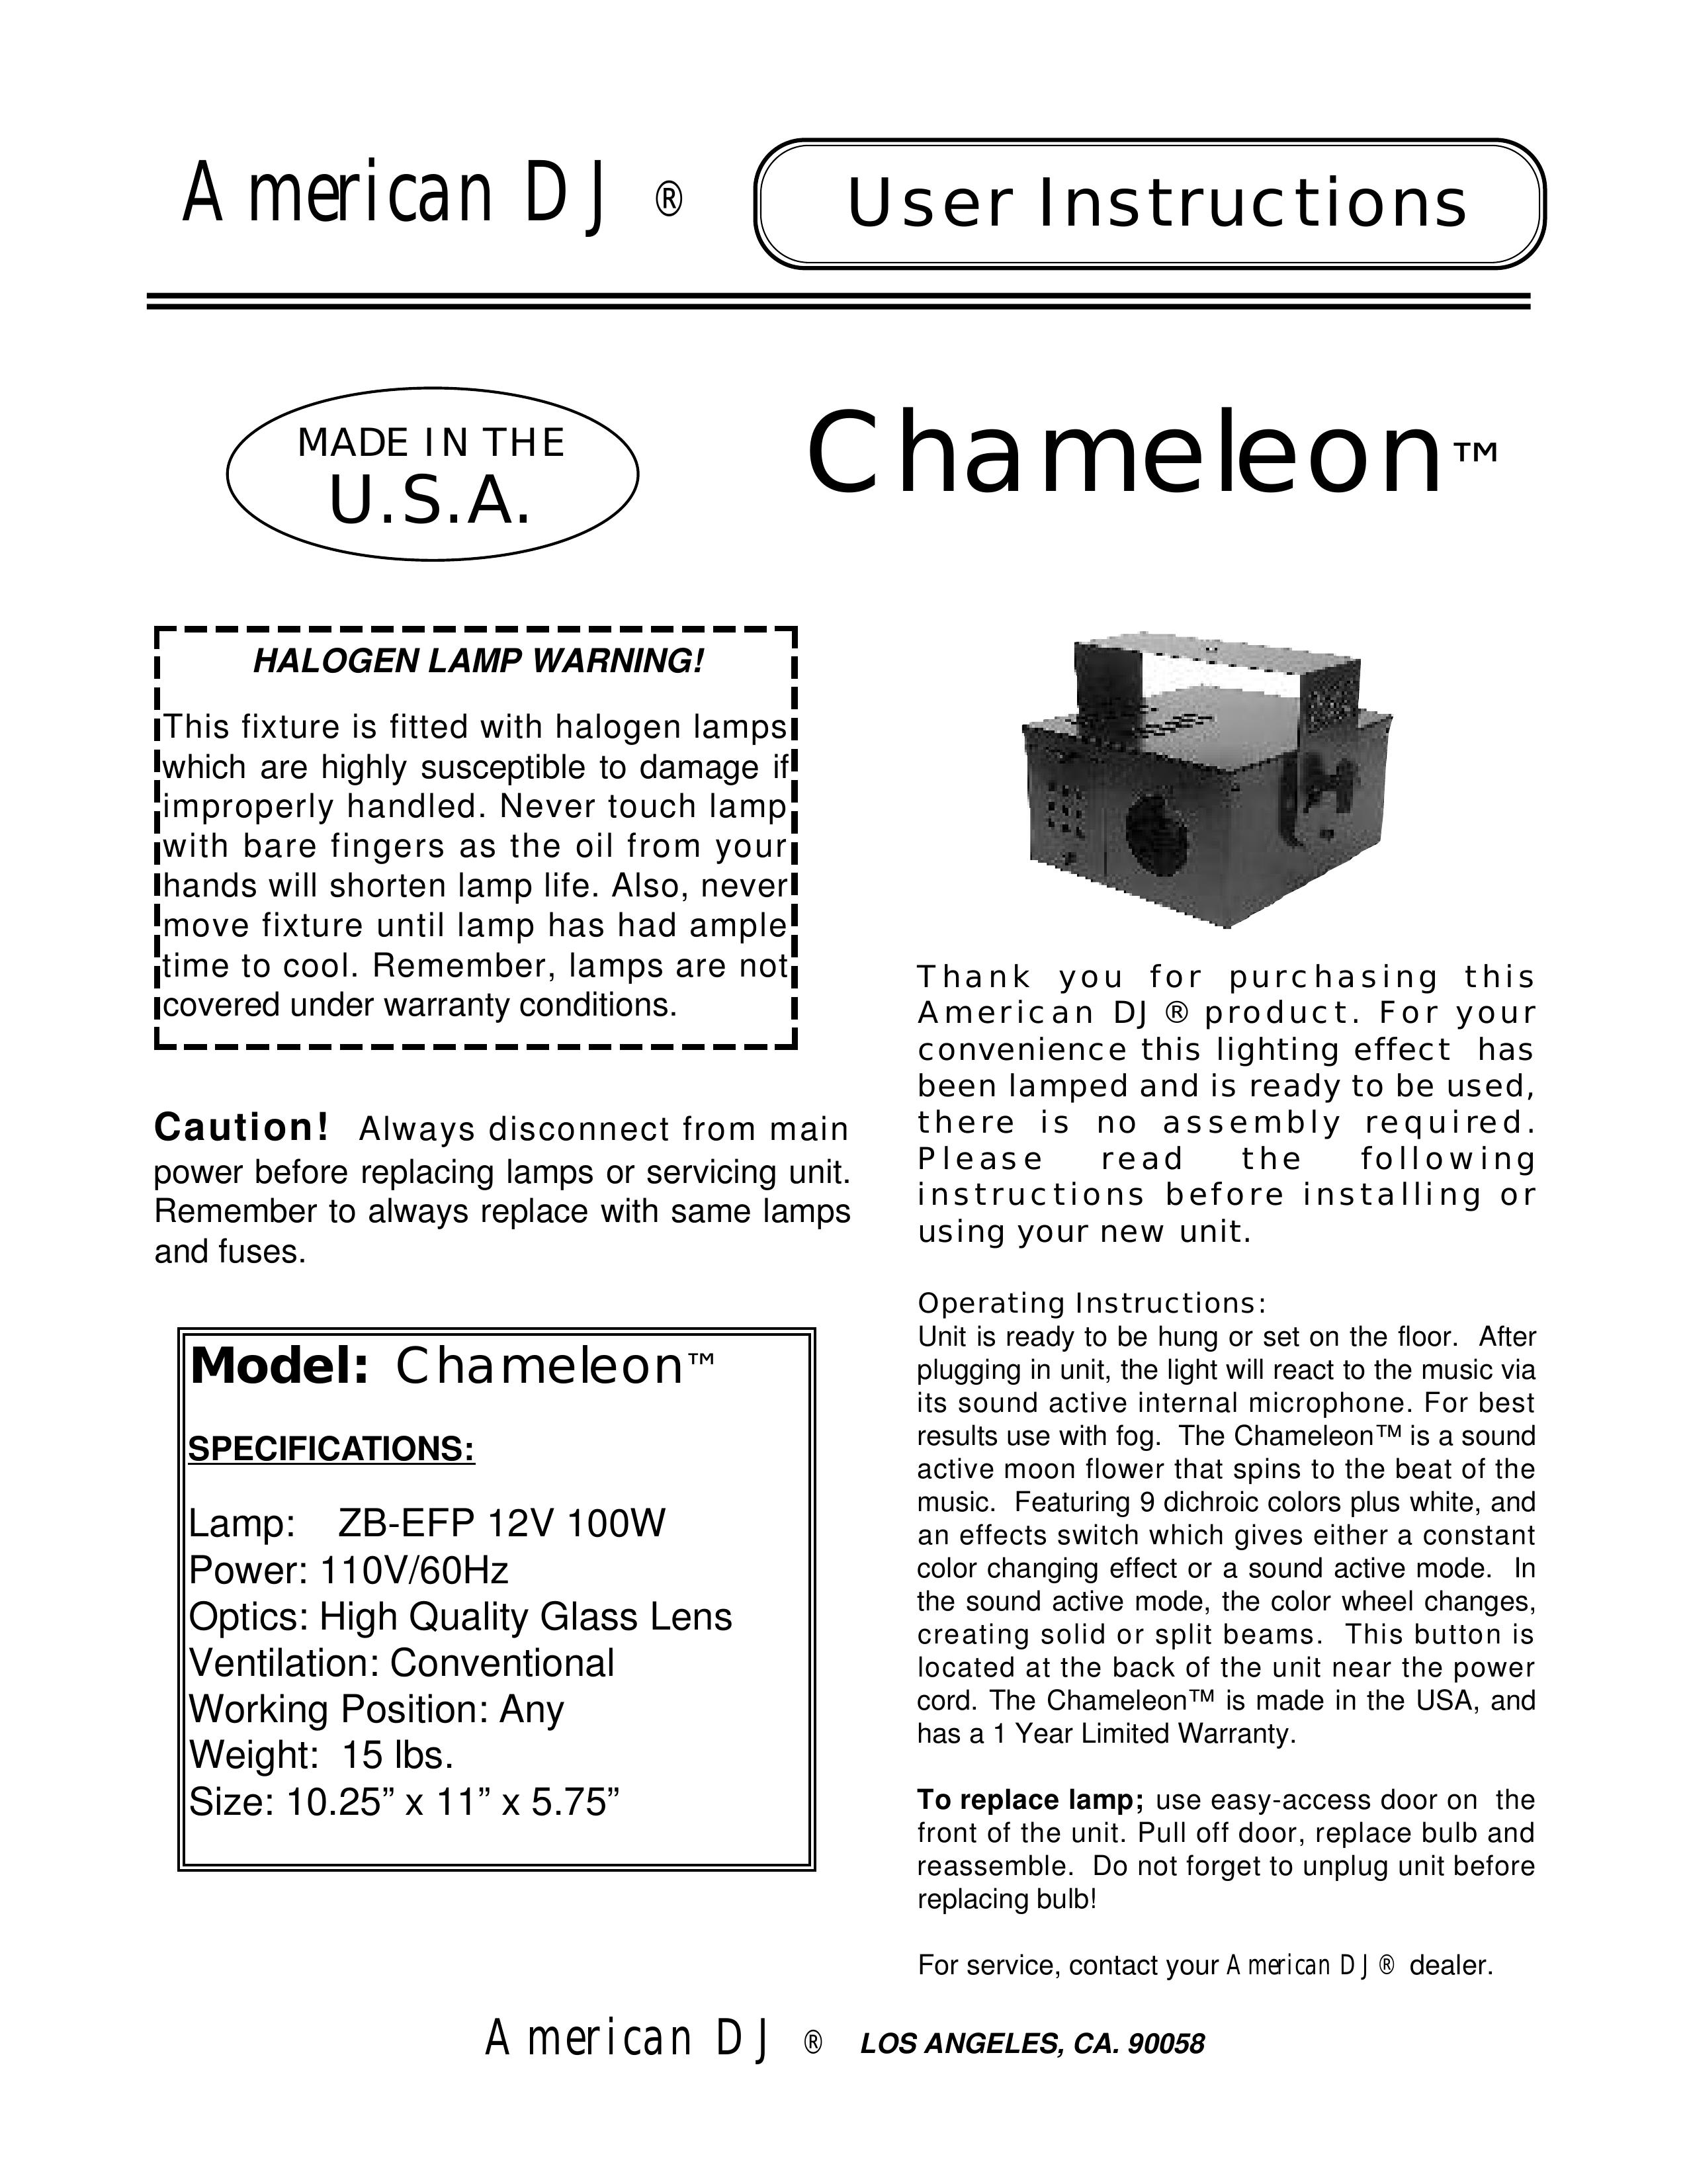 American DJ Chameleon DJ Equipment User Manual